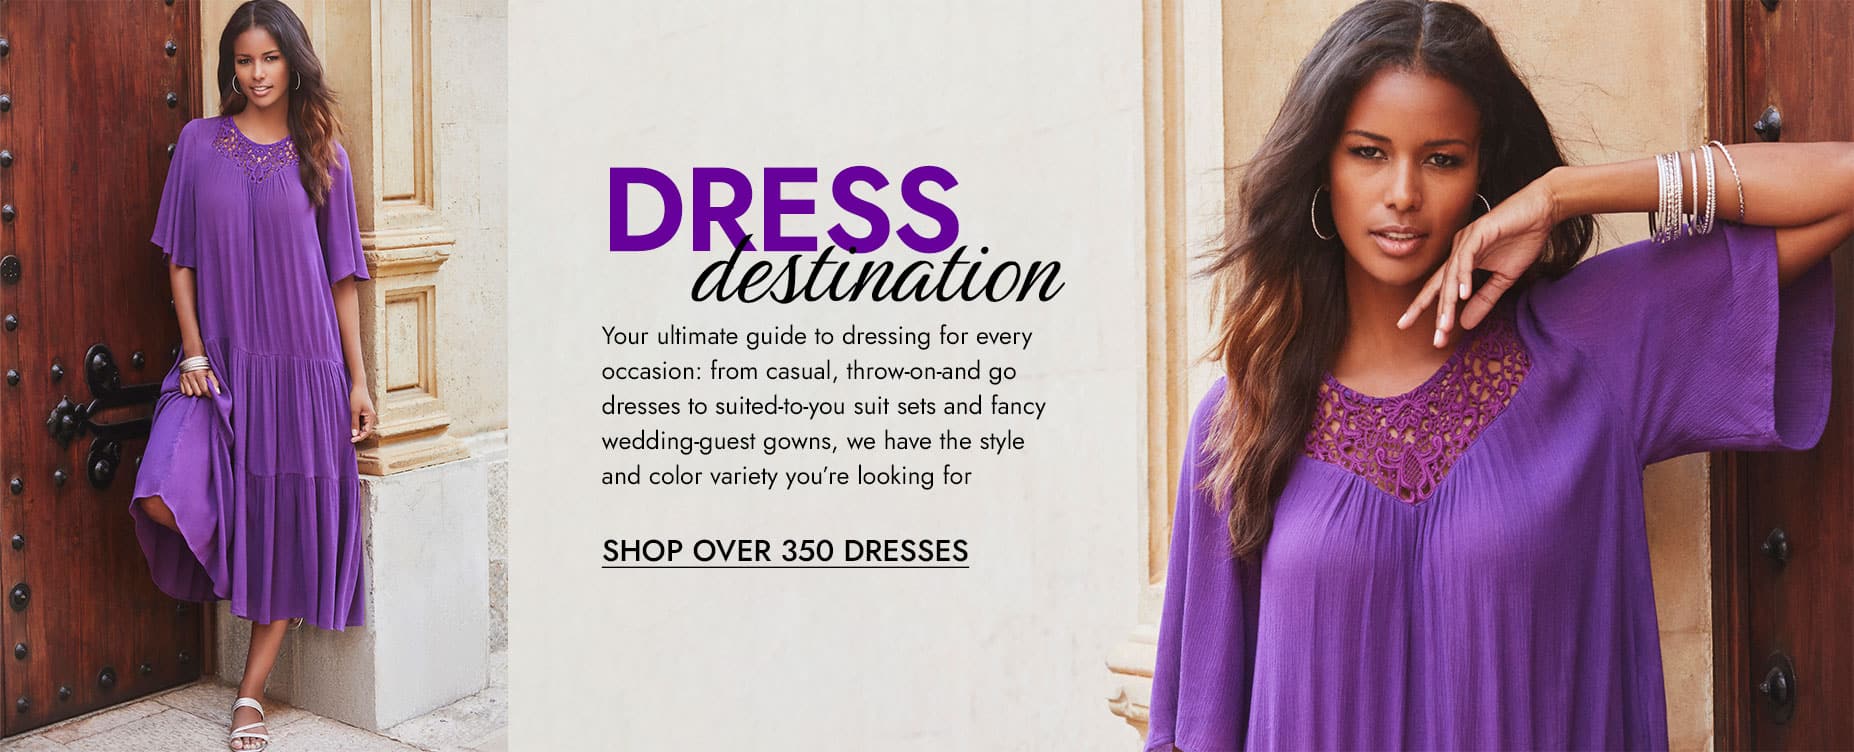 dress destination shop over 350 dresses